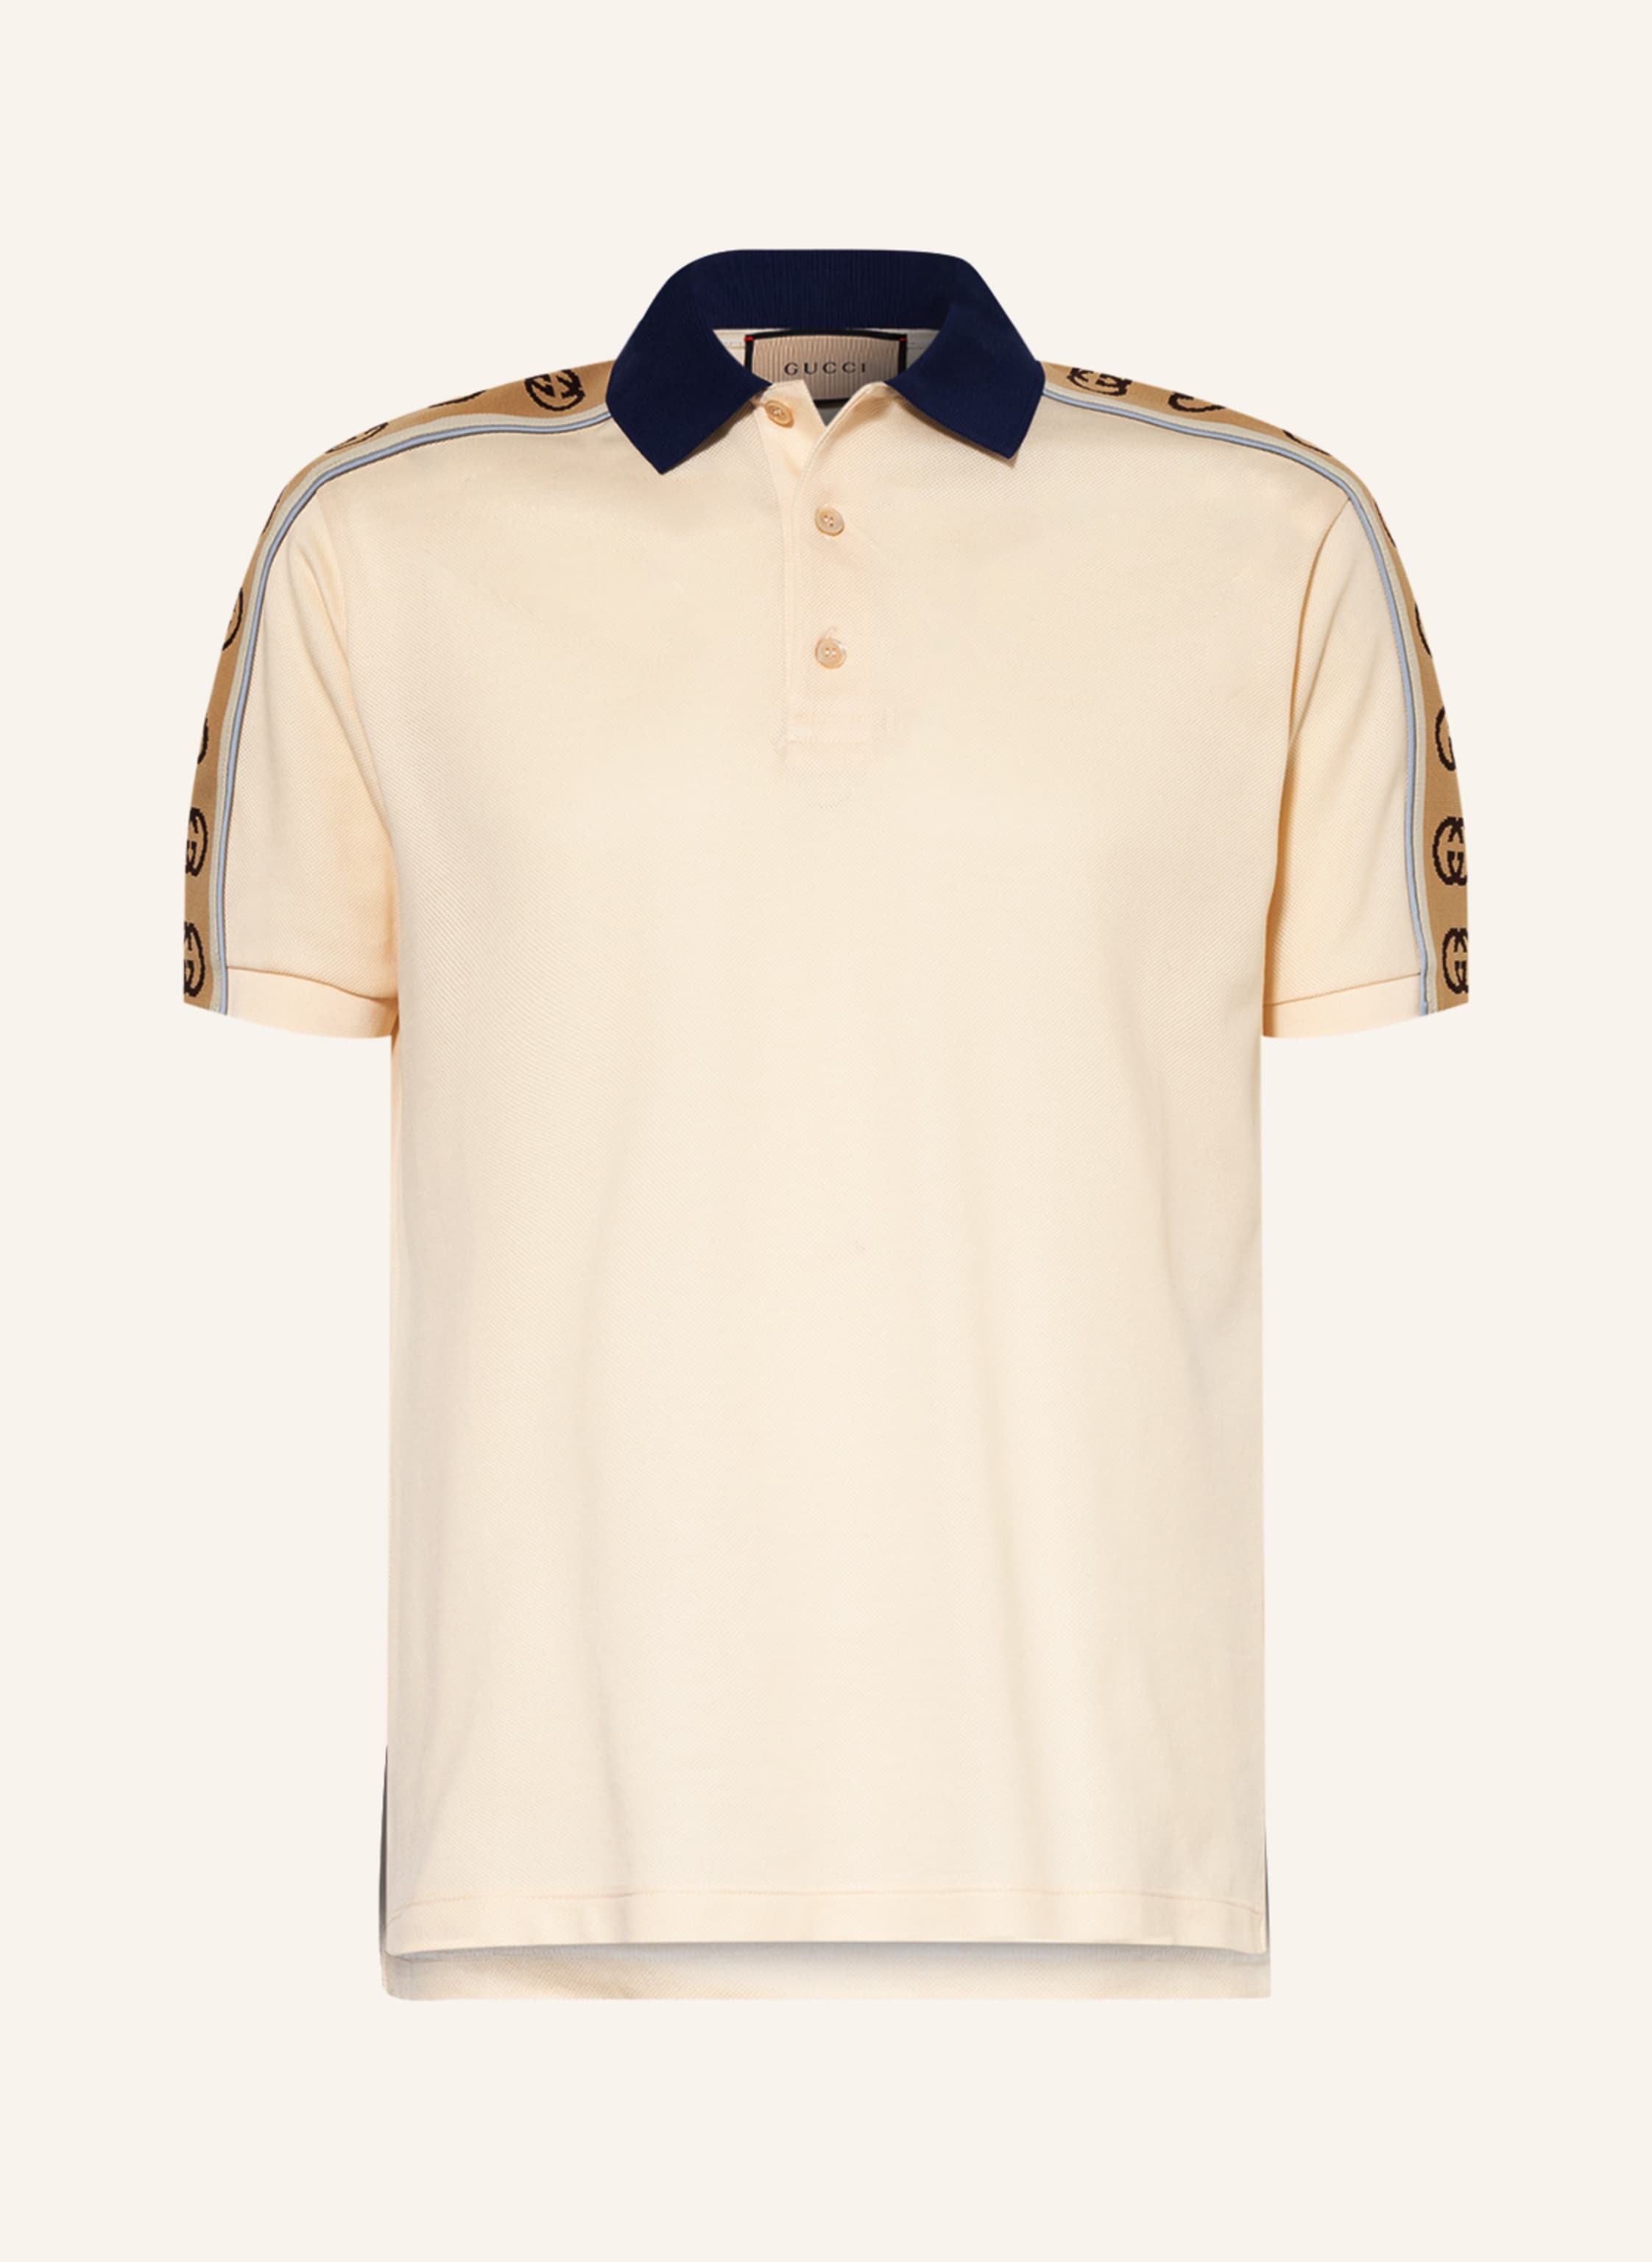 GUCCI Piqué polo shirt regular fit in cream | Breuninger